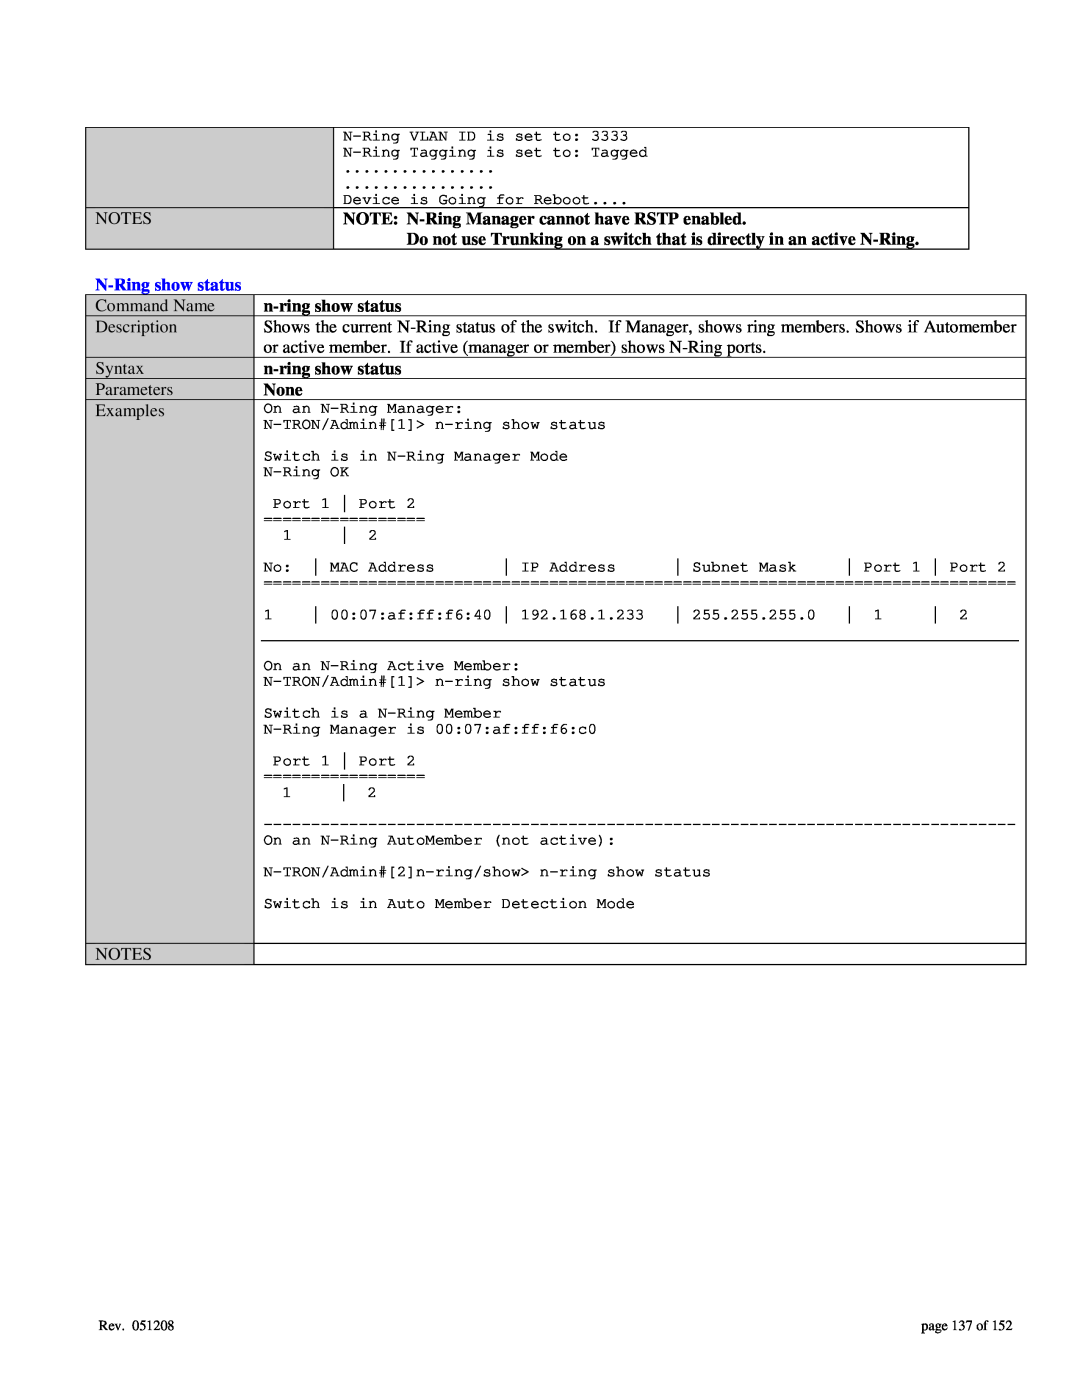 Gigabyte 7014 user manual N-Ring show status, page 137 of 